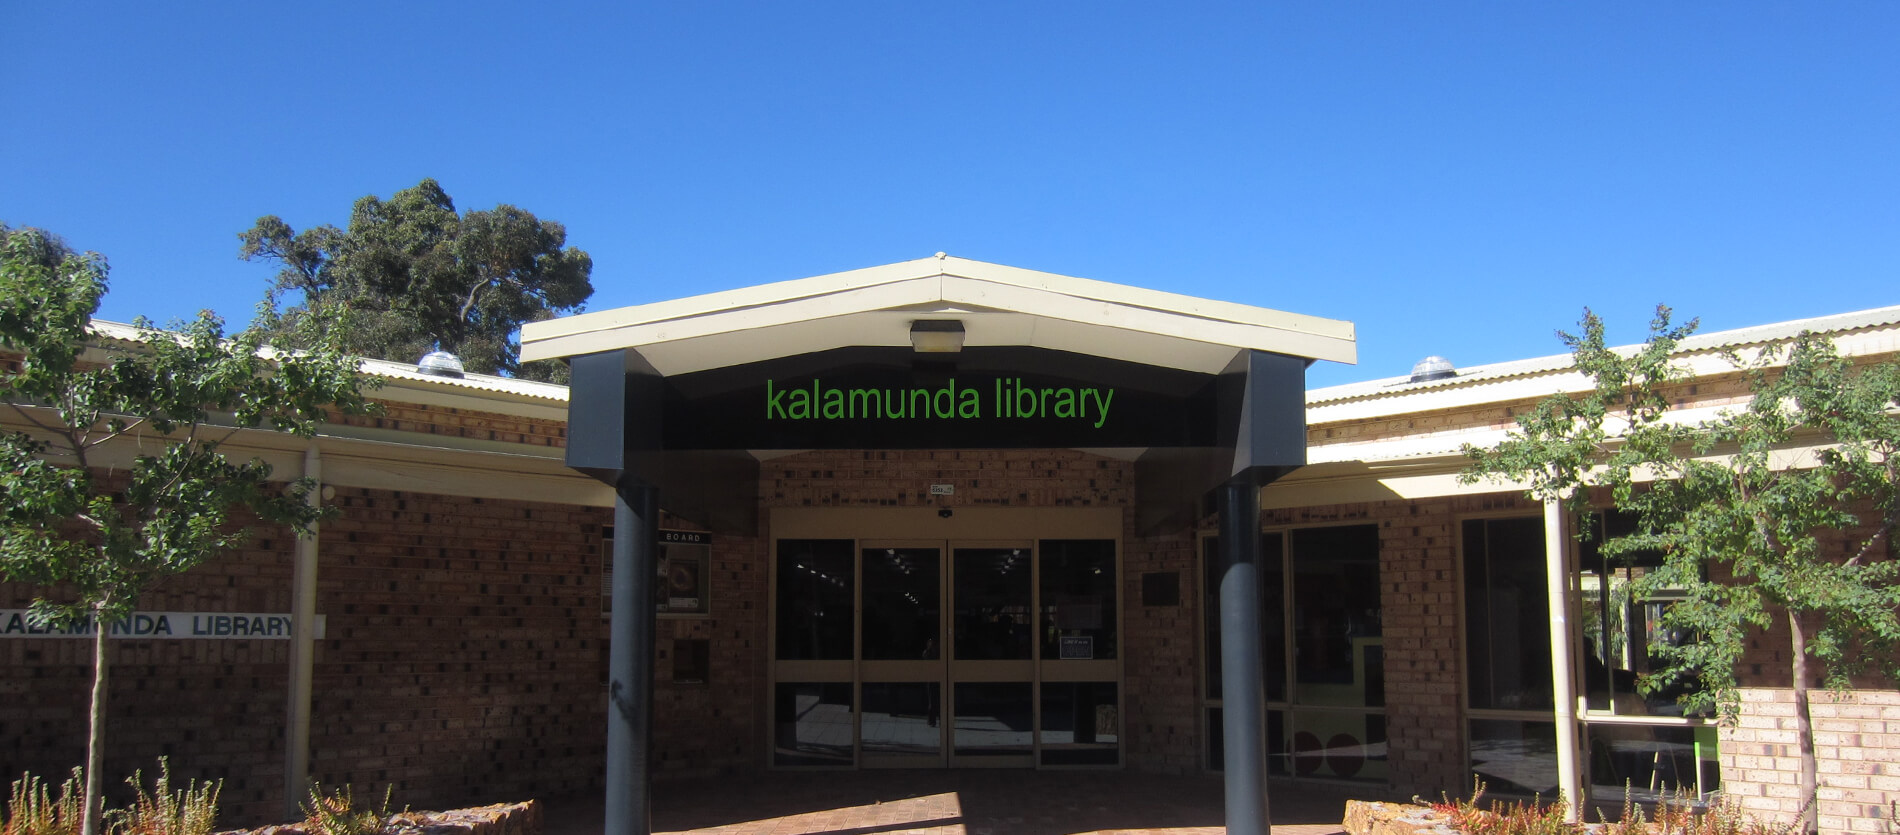 View of the entrance to Kalamunda Library